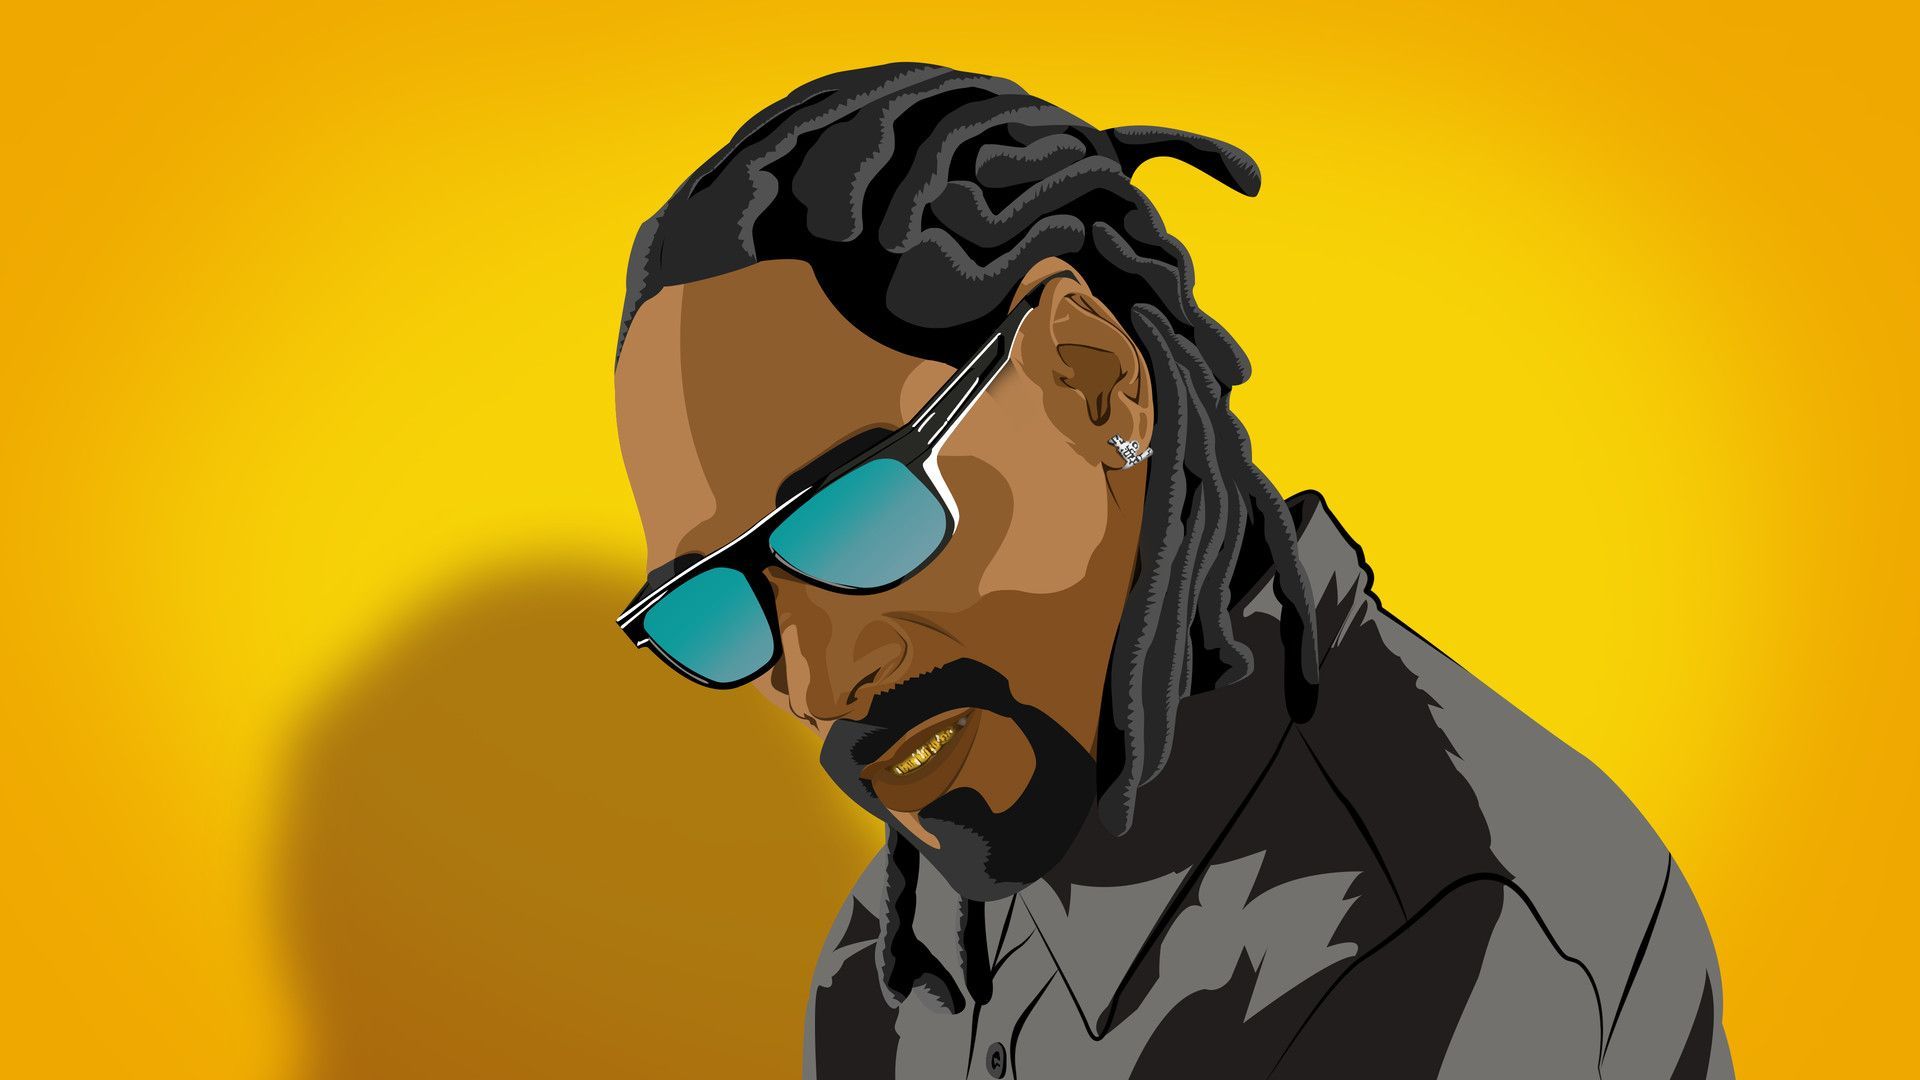 Snoop Dogg Cartoon Wallpaper Free Snoop Dogg Cartoon